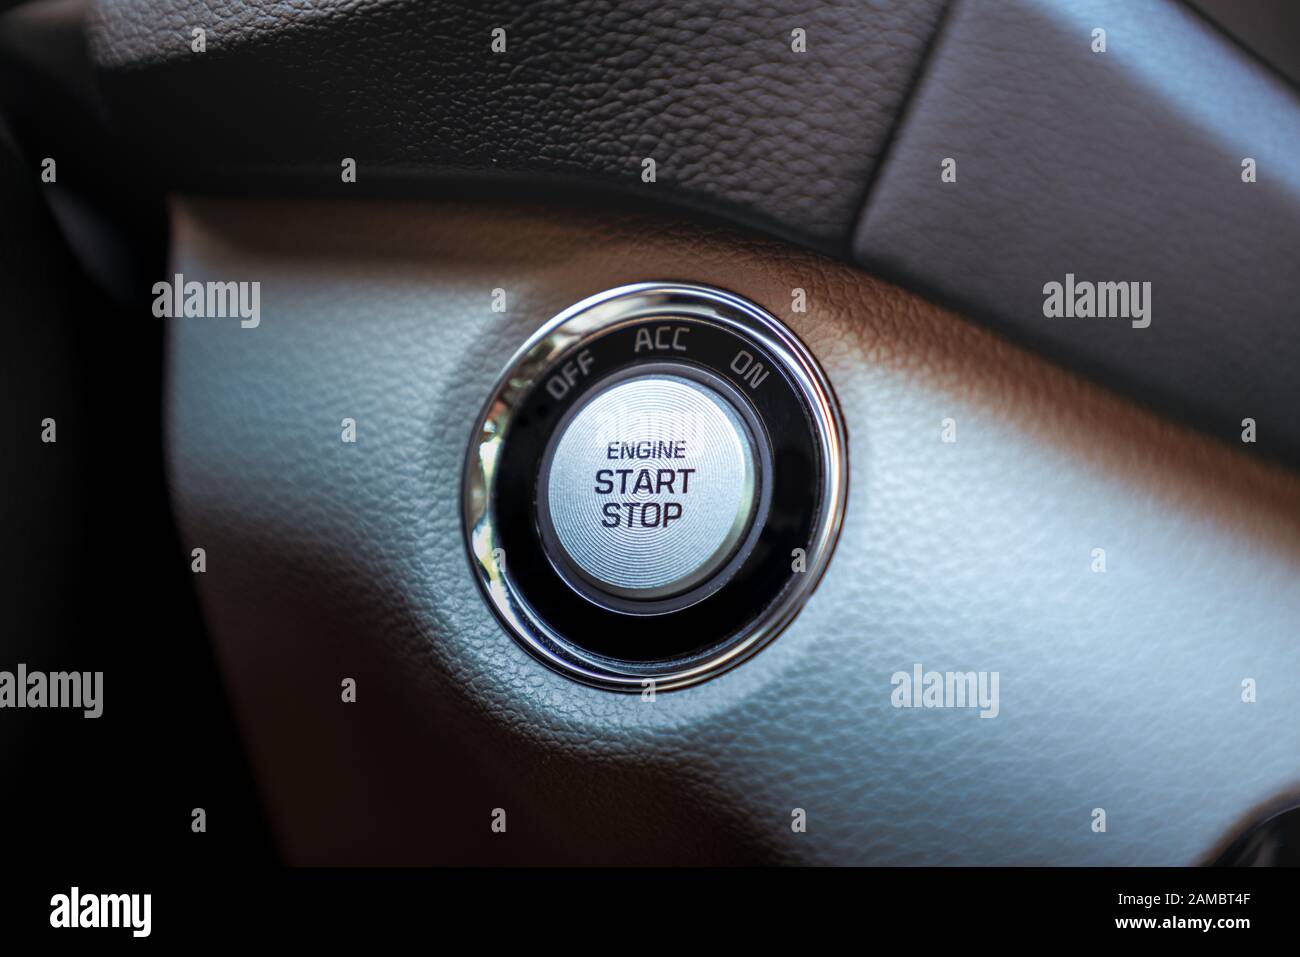 Start stop engine modern new technology car button, close up Stock Photo